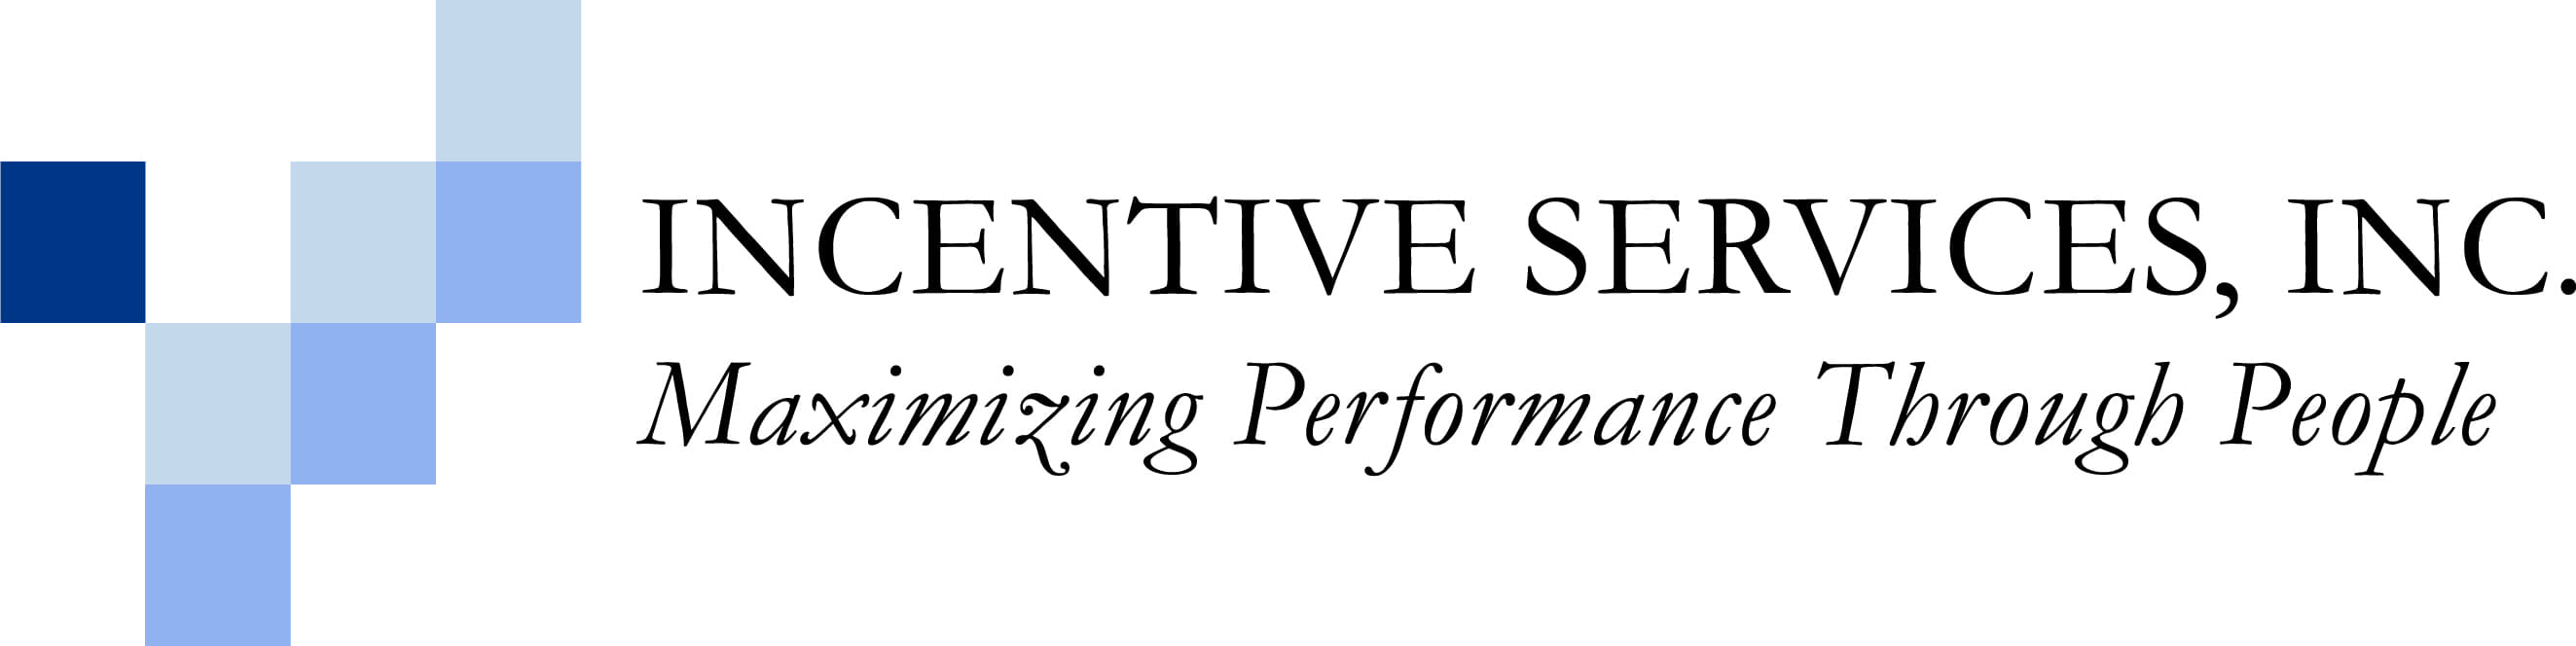 Incentive Services Inc